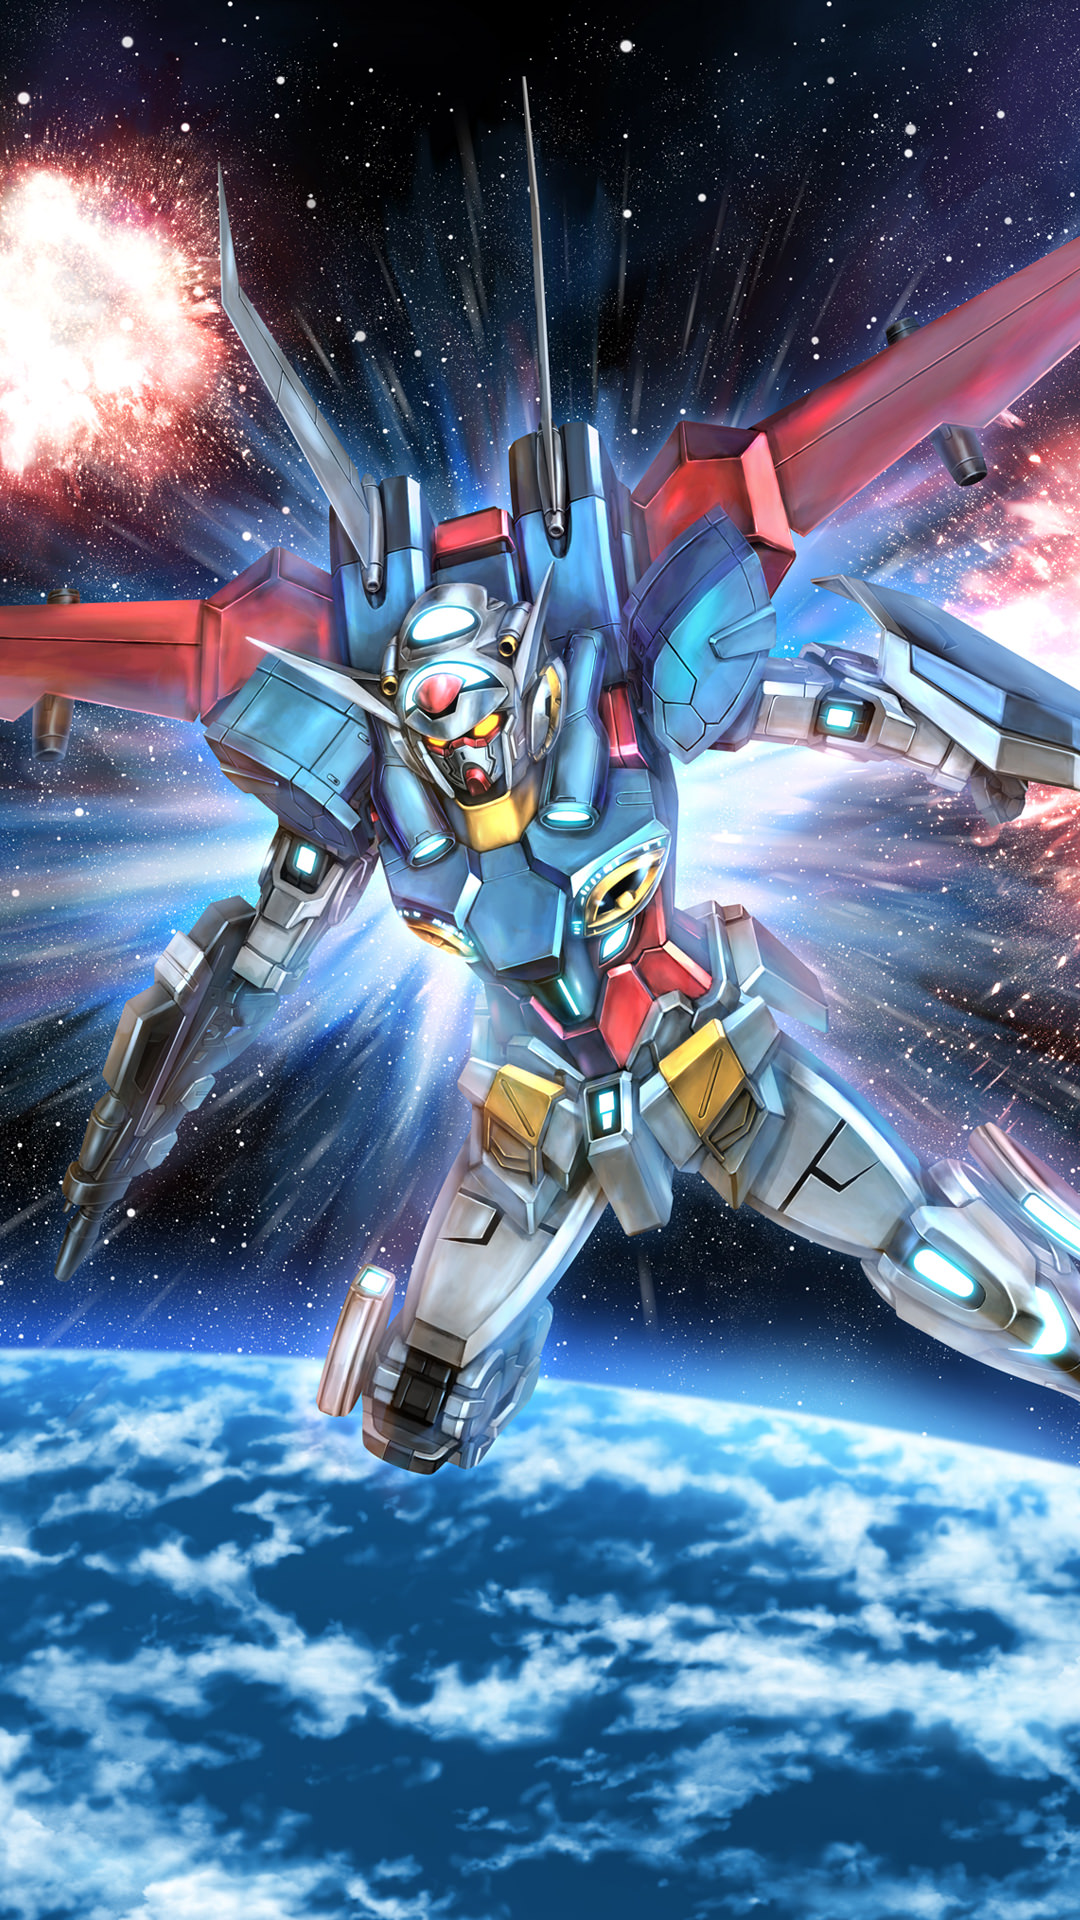 Gundam G Recongista Iphone Wallpapers